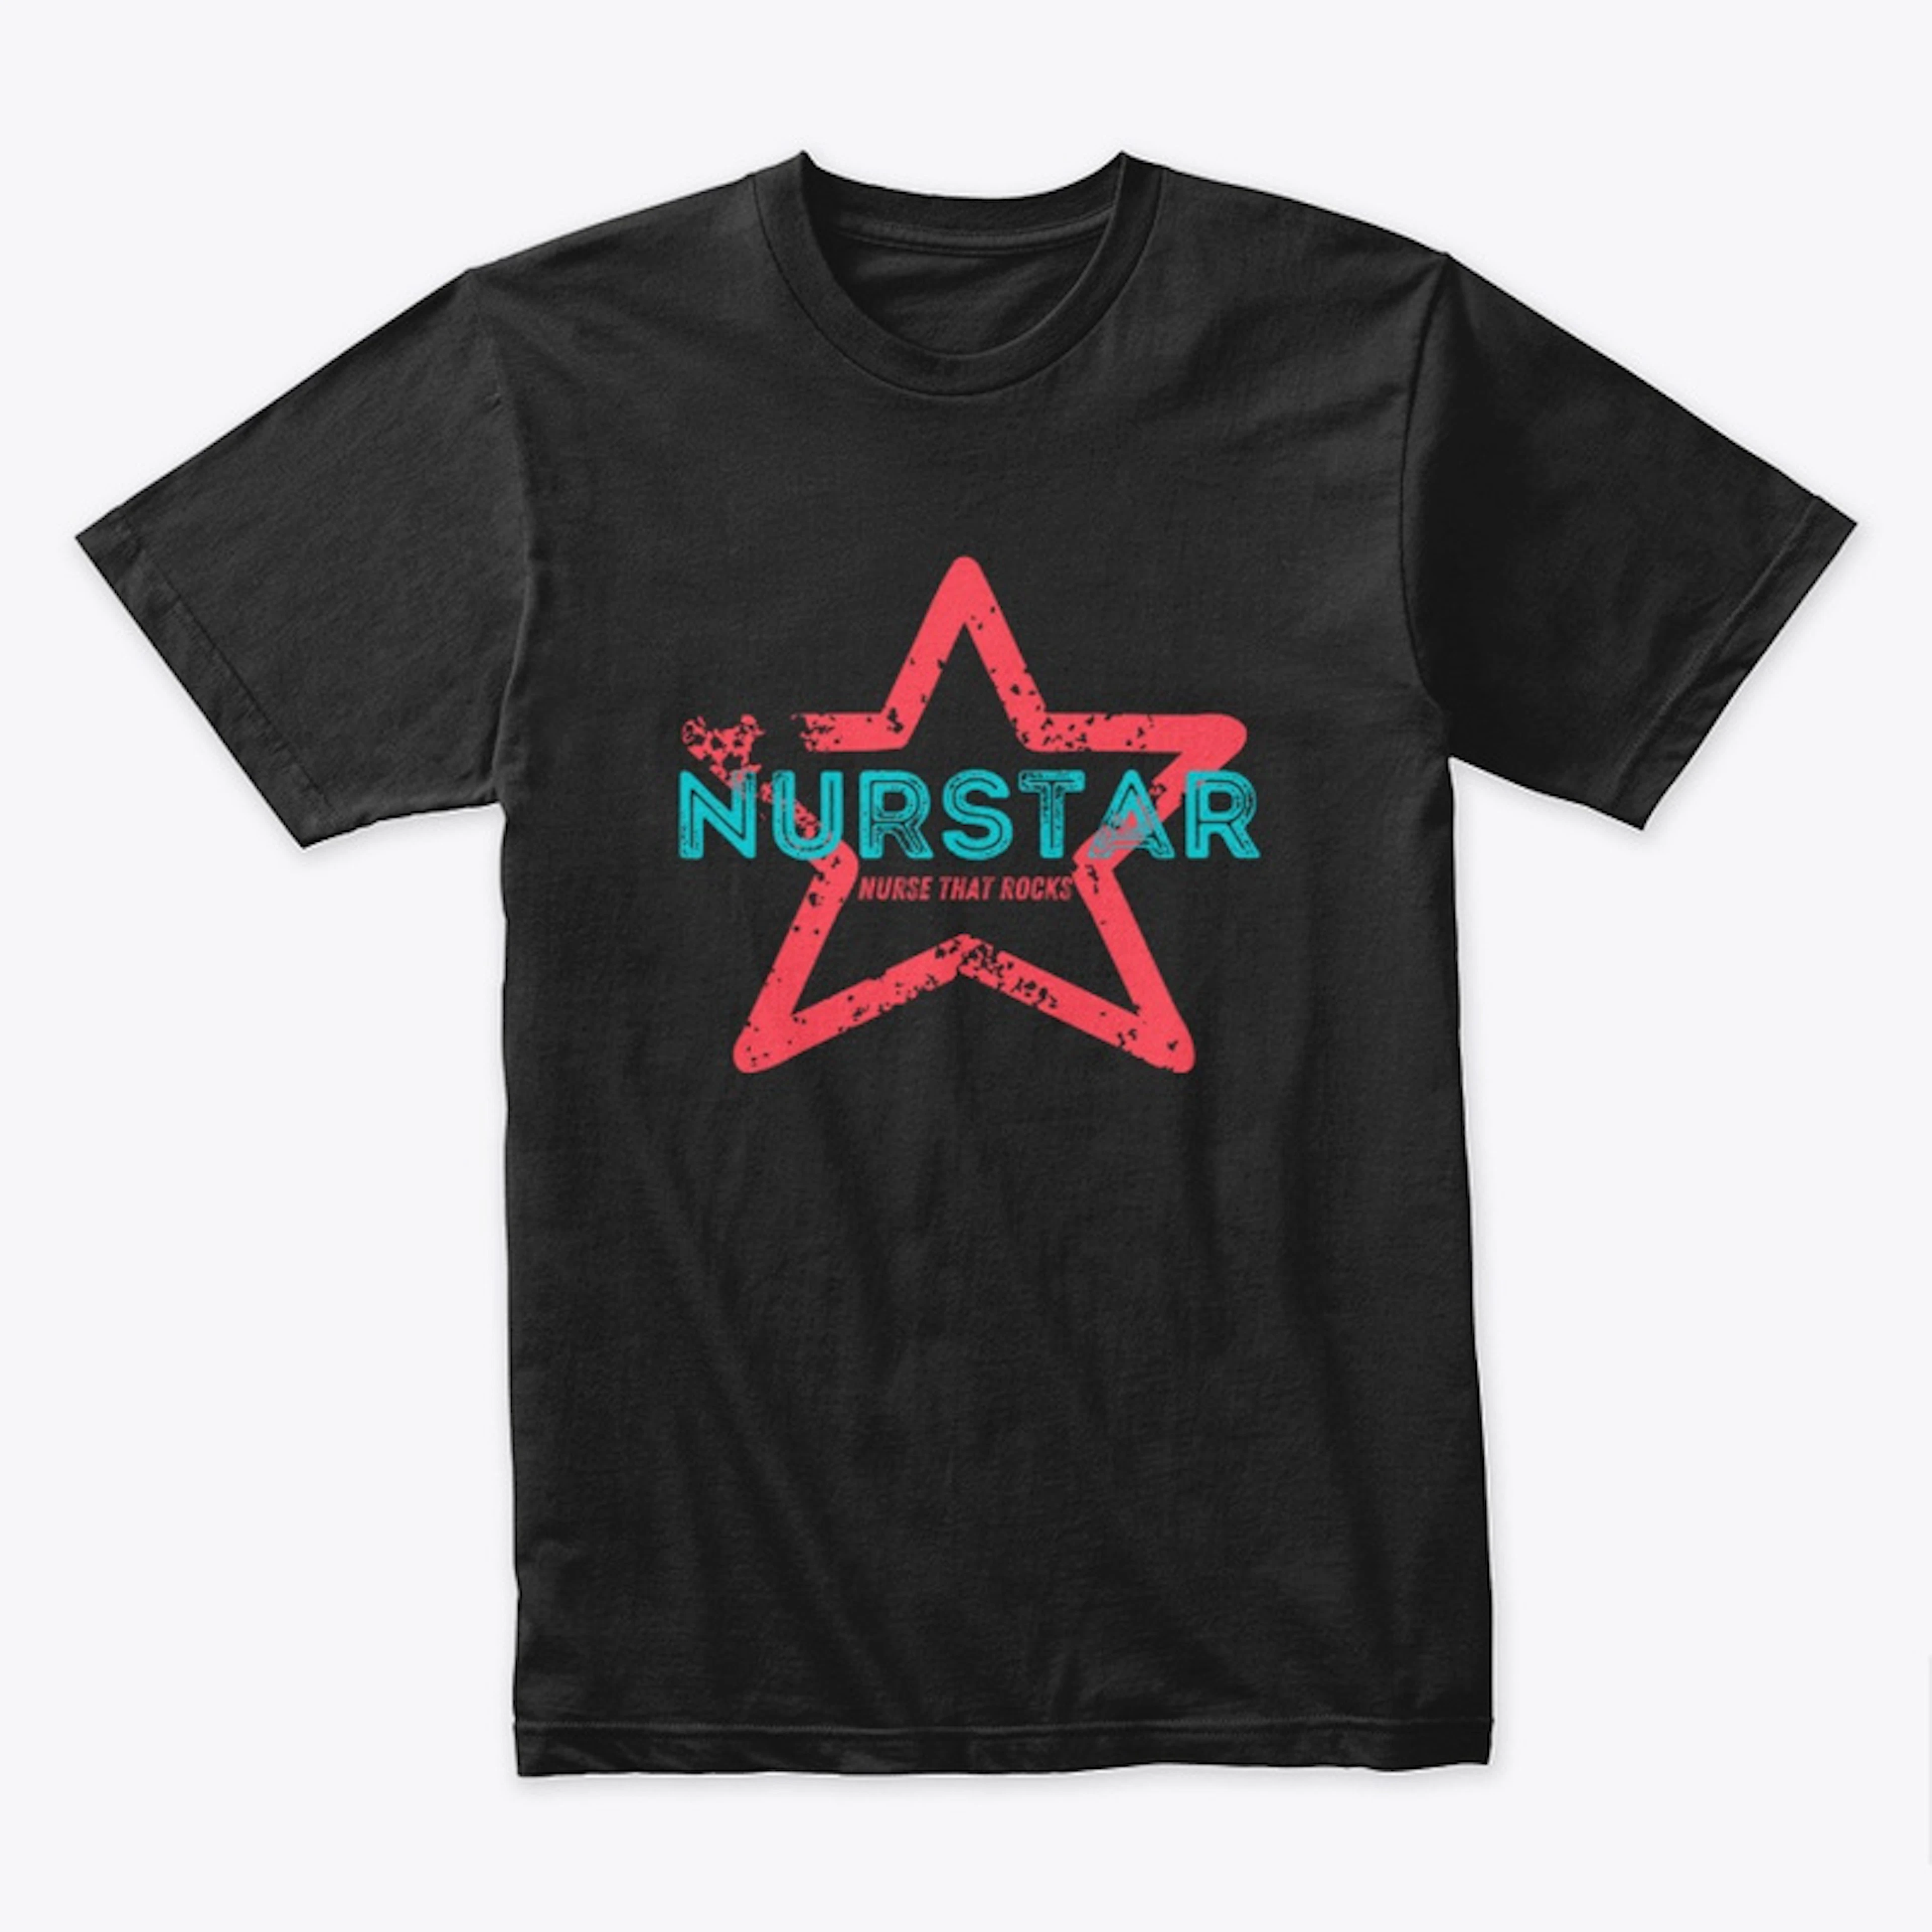 Nurstar: Nurse that Rocks